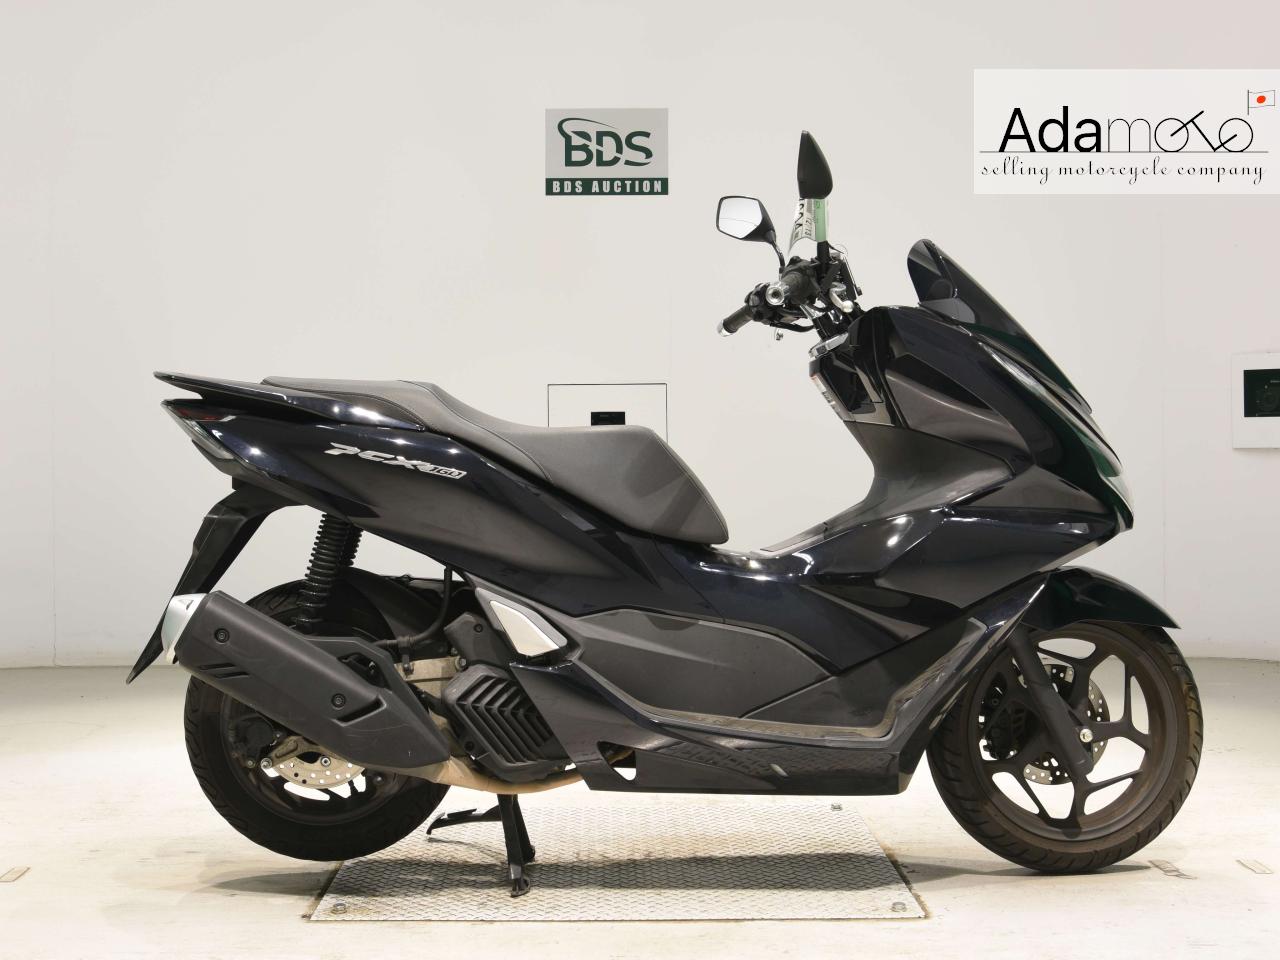 Honda PCX160 - Adamoto - Motorcycles from Japan